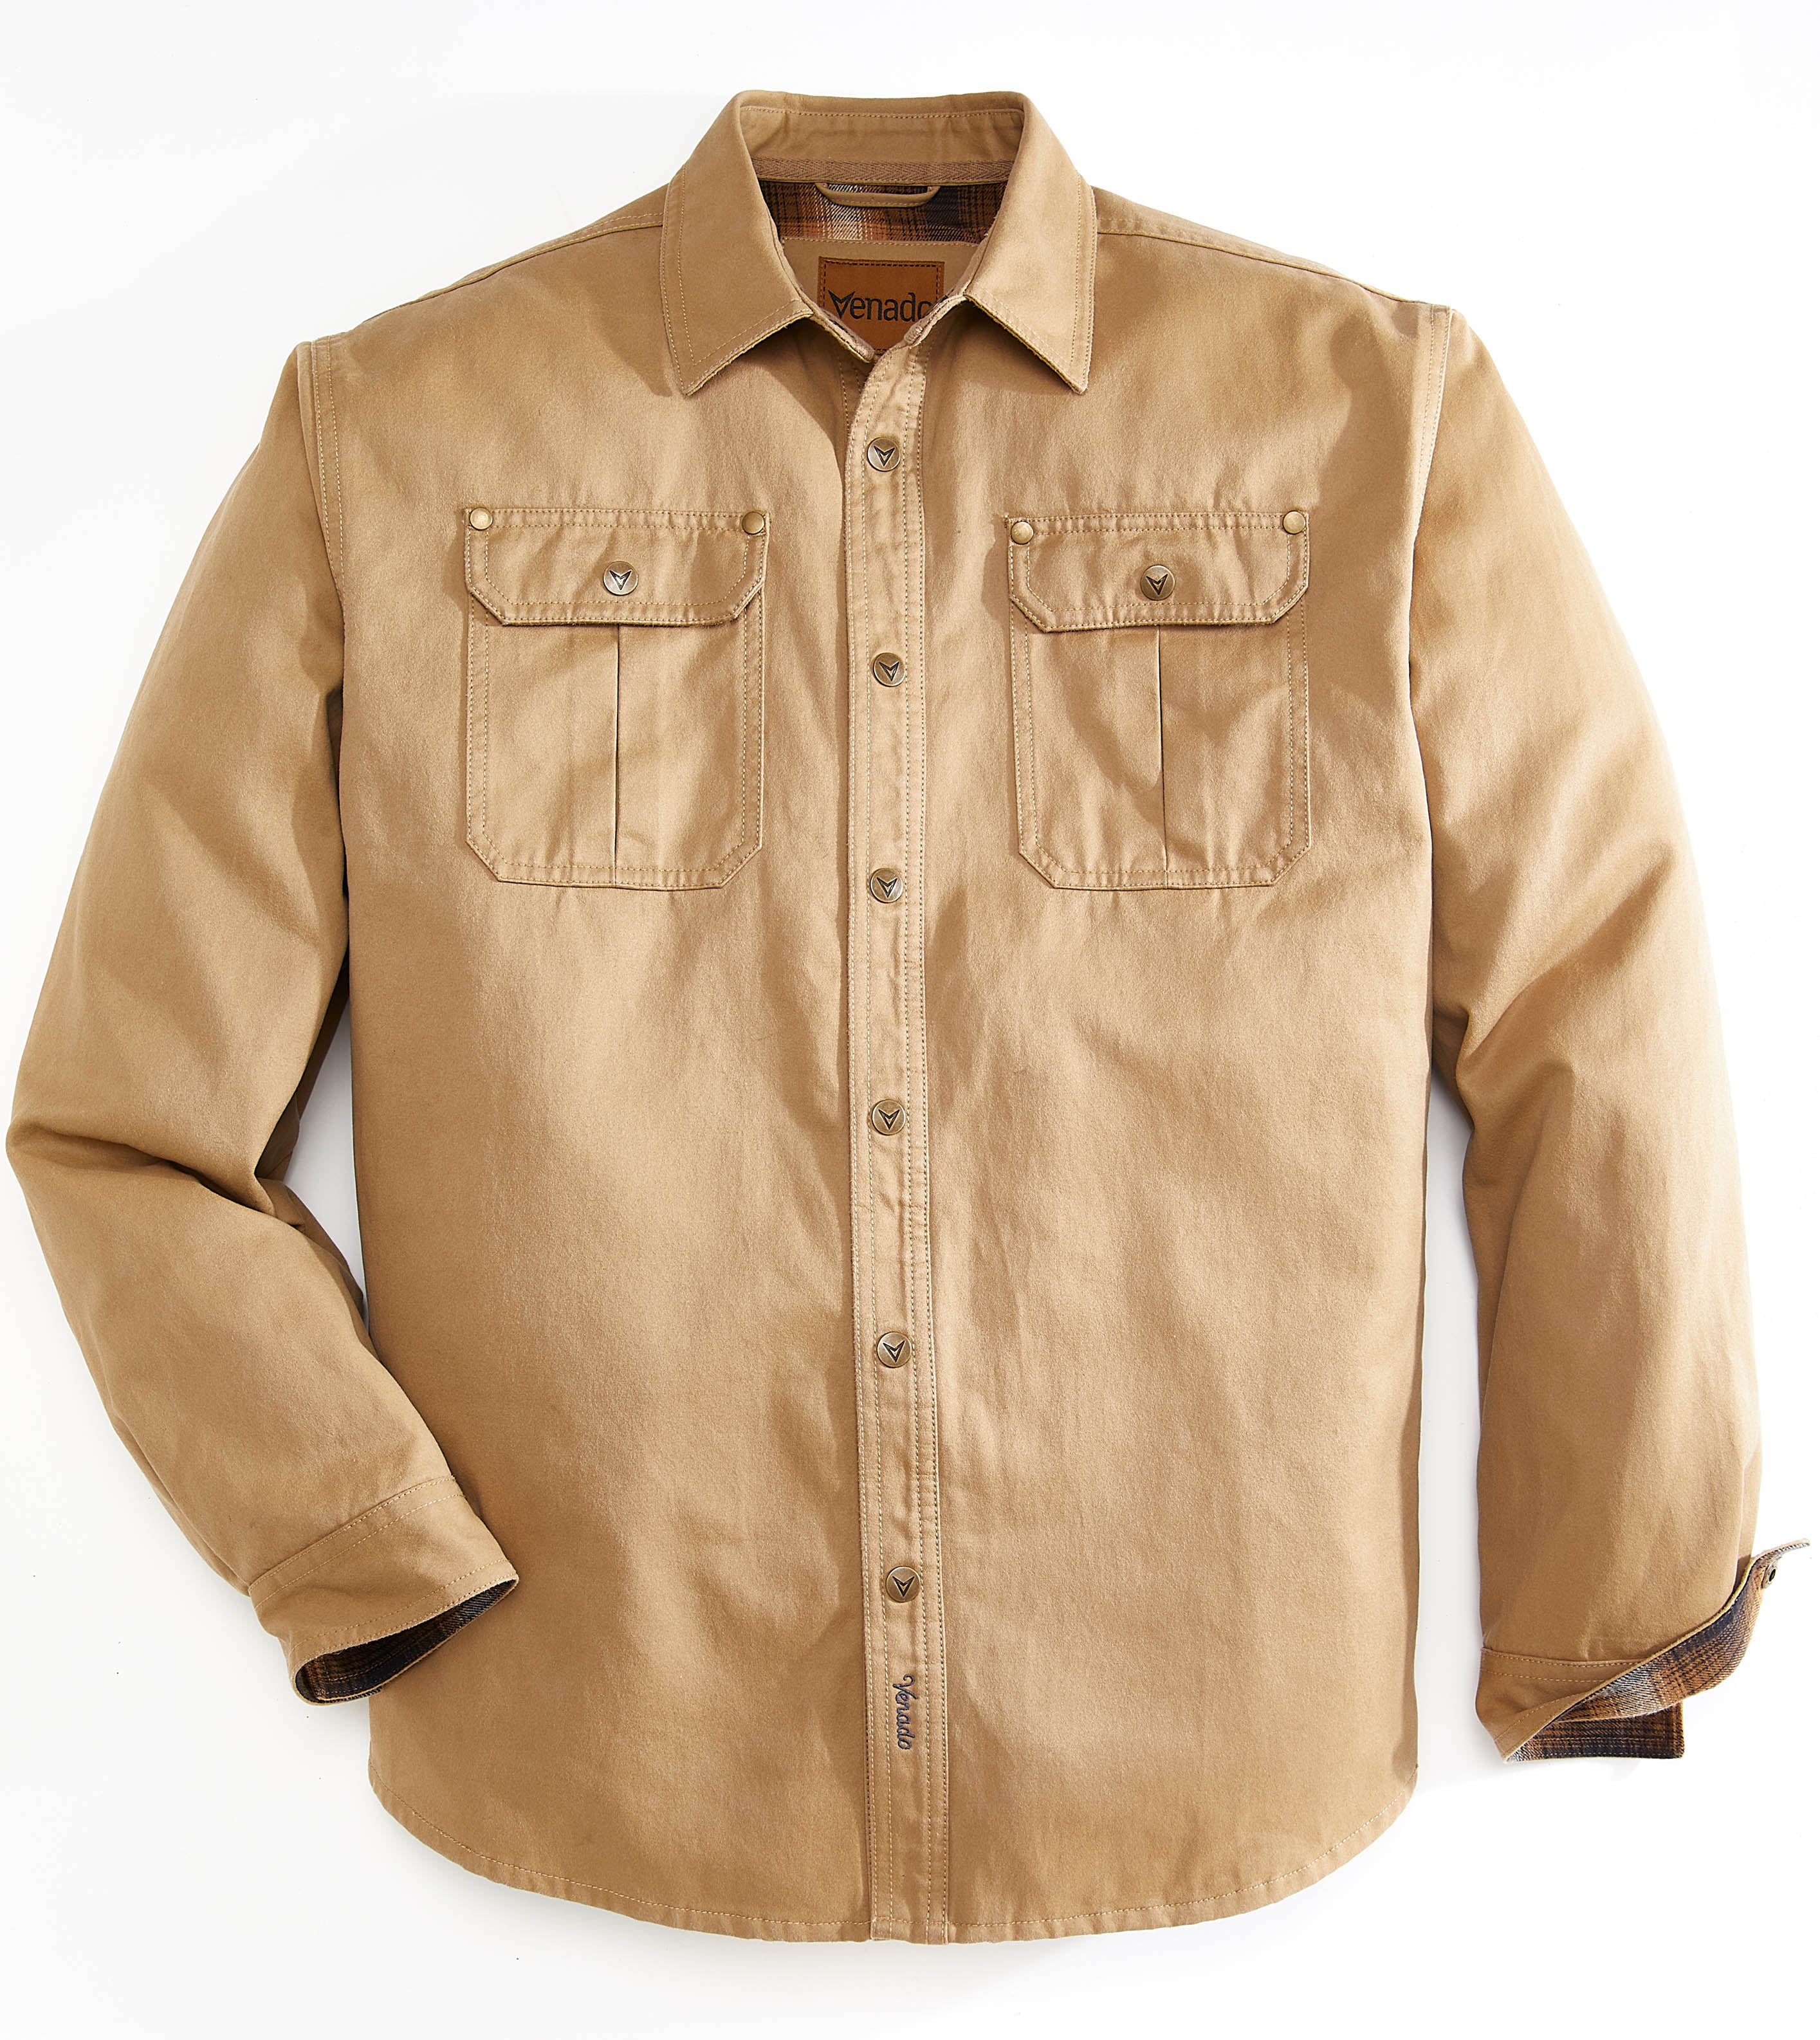 Bountyman Concealed Carry Shirt Jacket – Venado